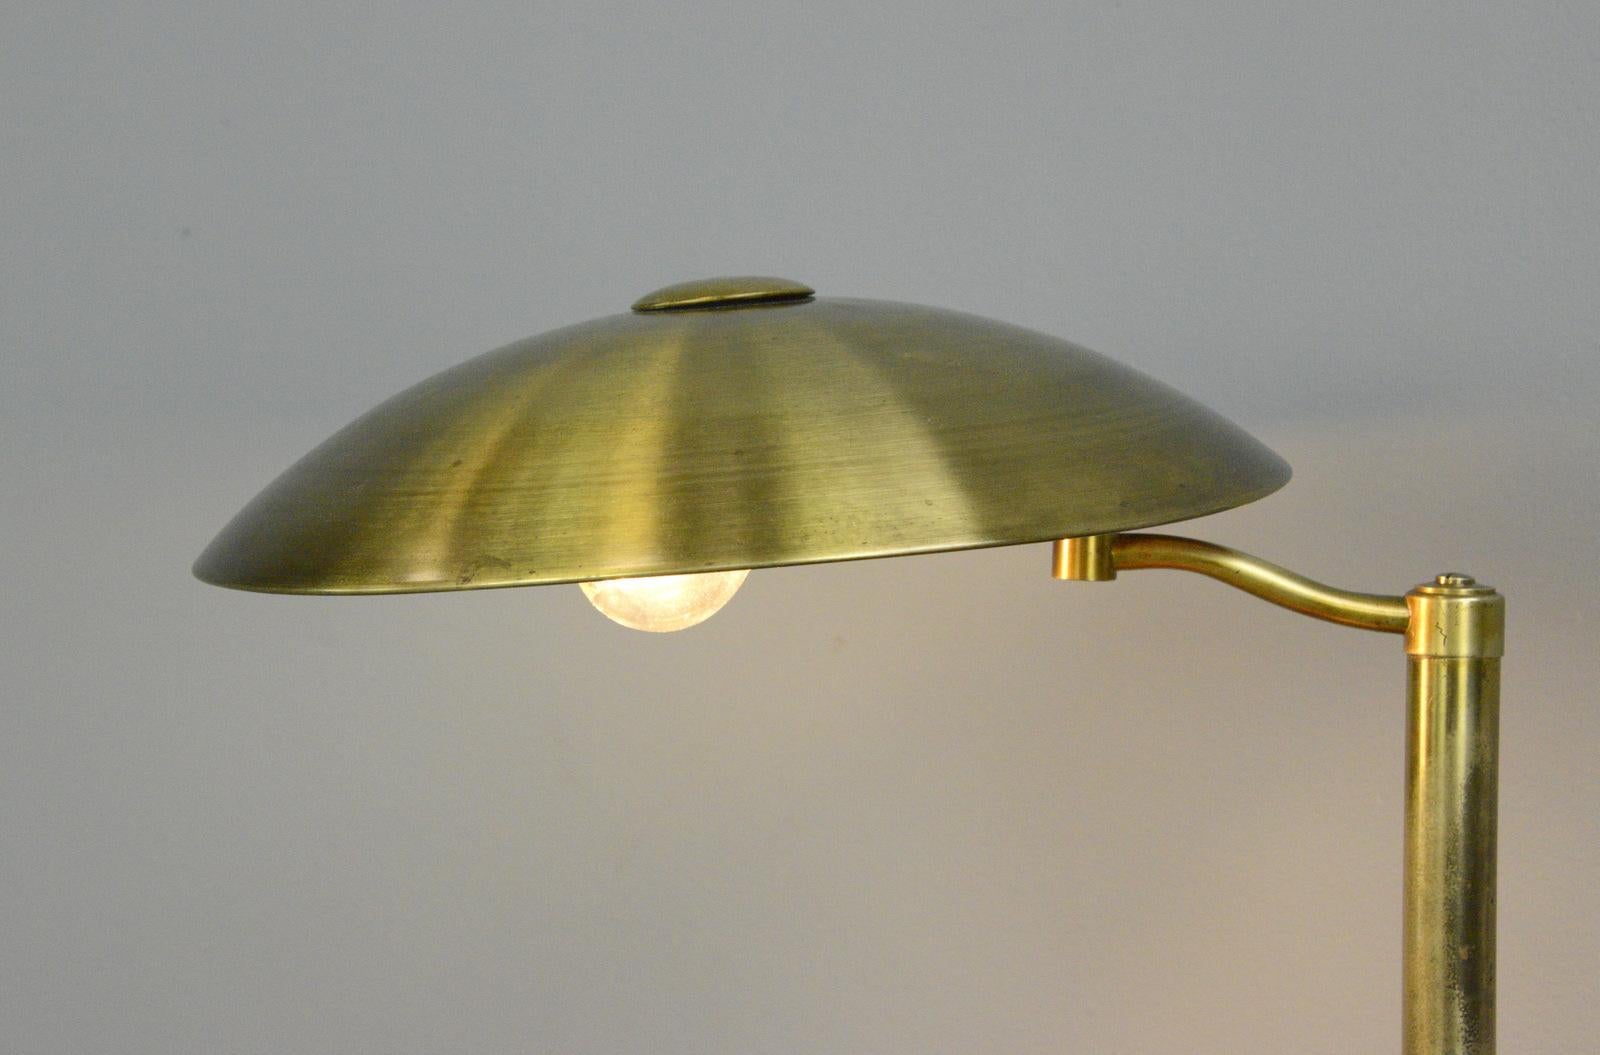 Bauhaus Swing Arm Brass Table Lamp by Hillebrand circa 1930s